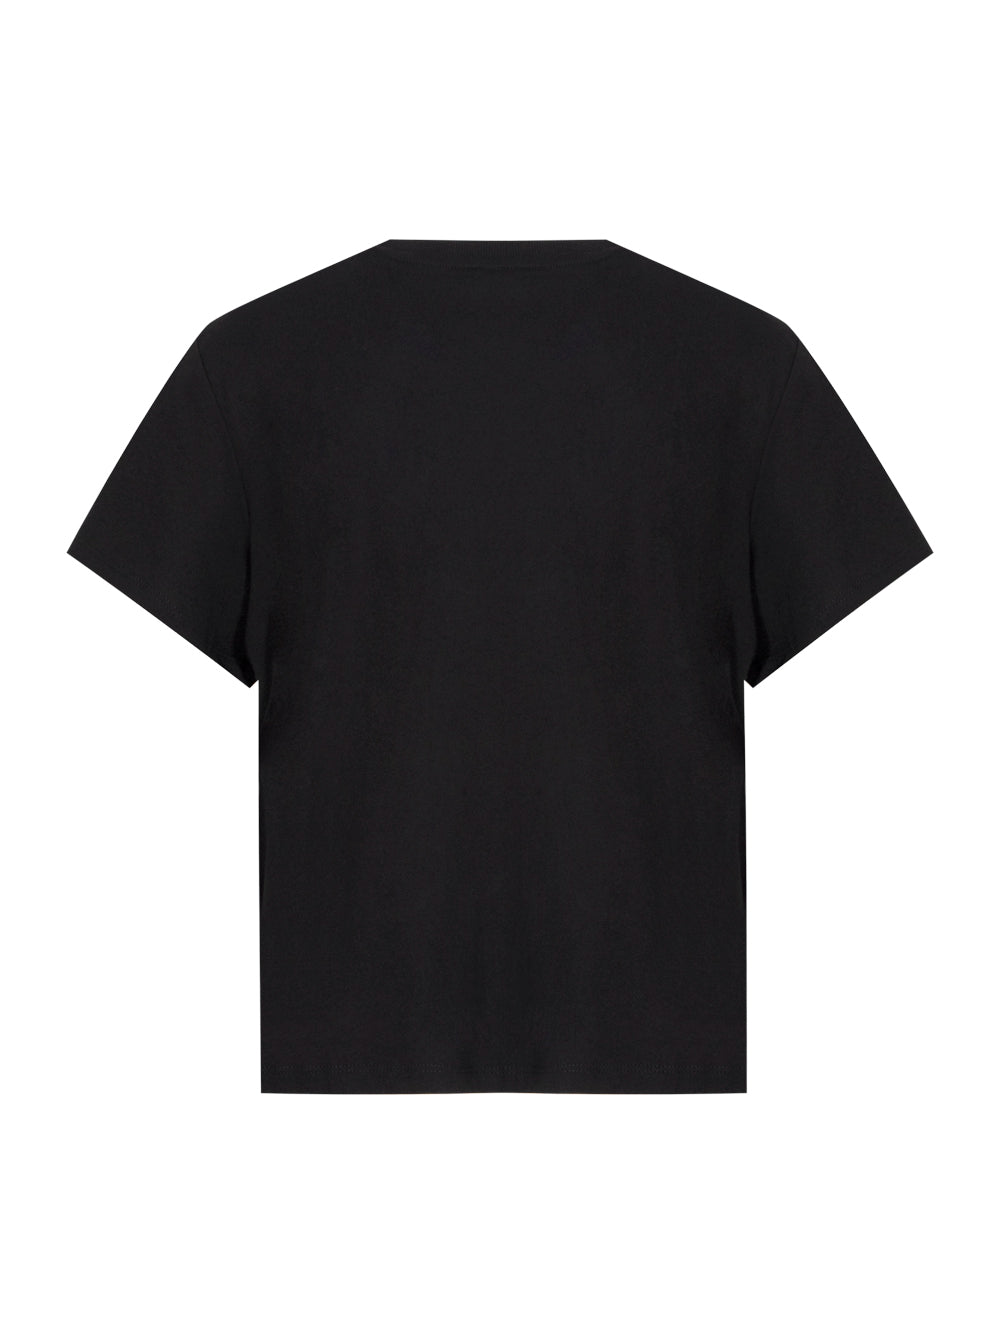 Puff Logo Short Sleeve Cropped Tee (Black)